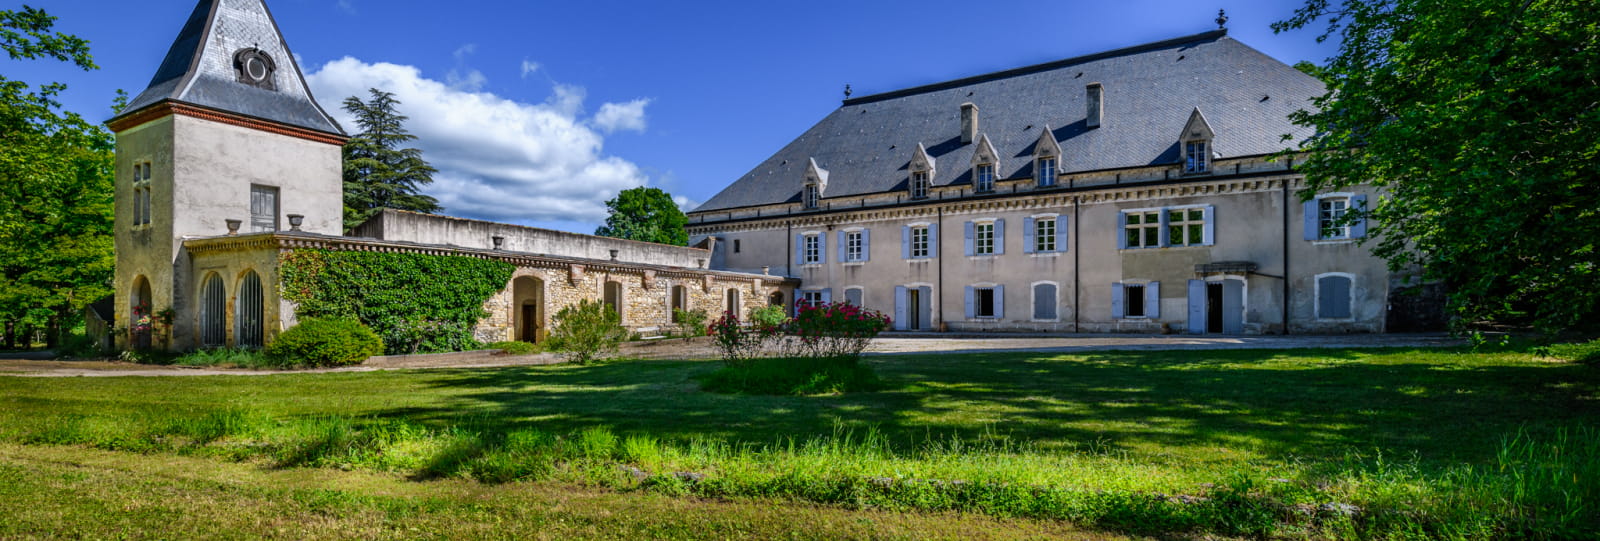 Restaurant Rose - Château de Freycinet